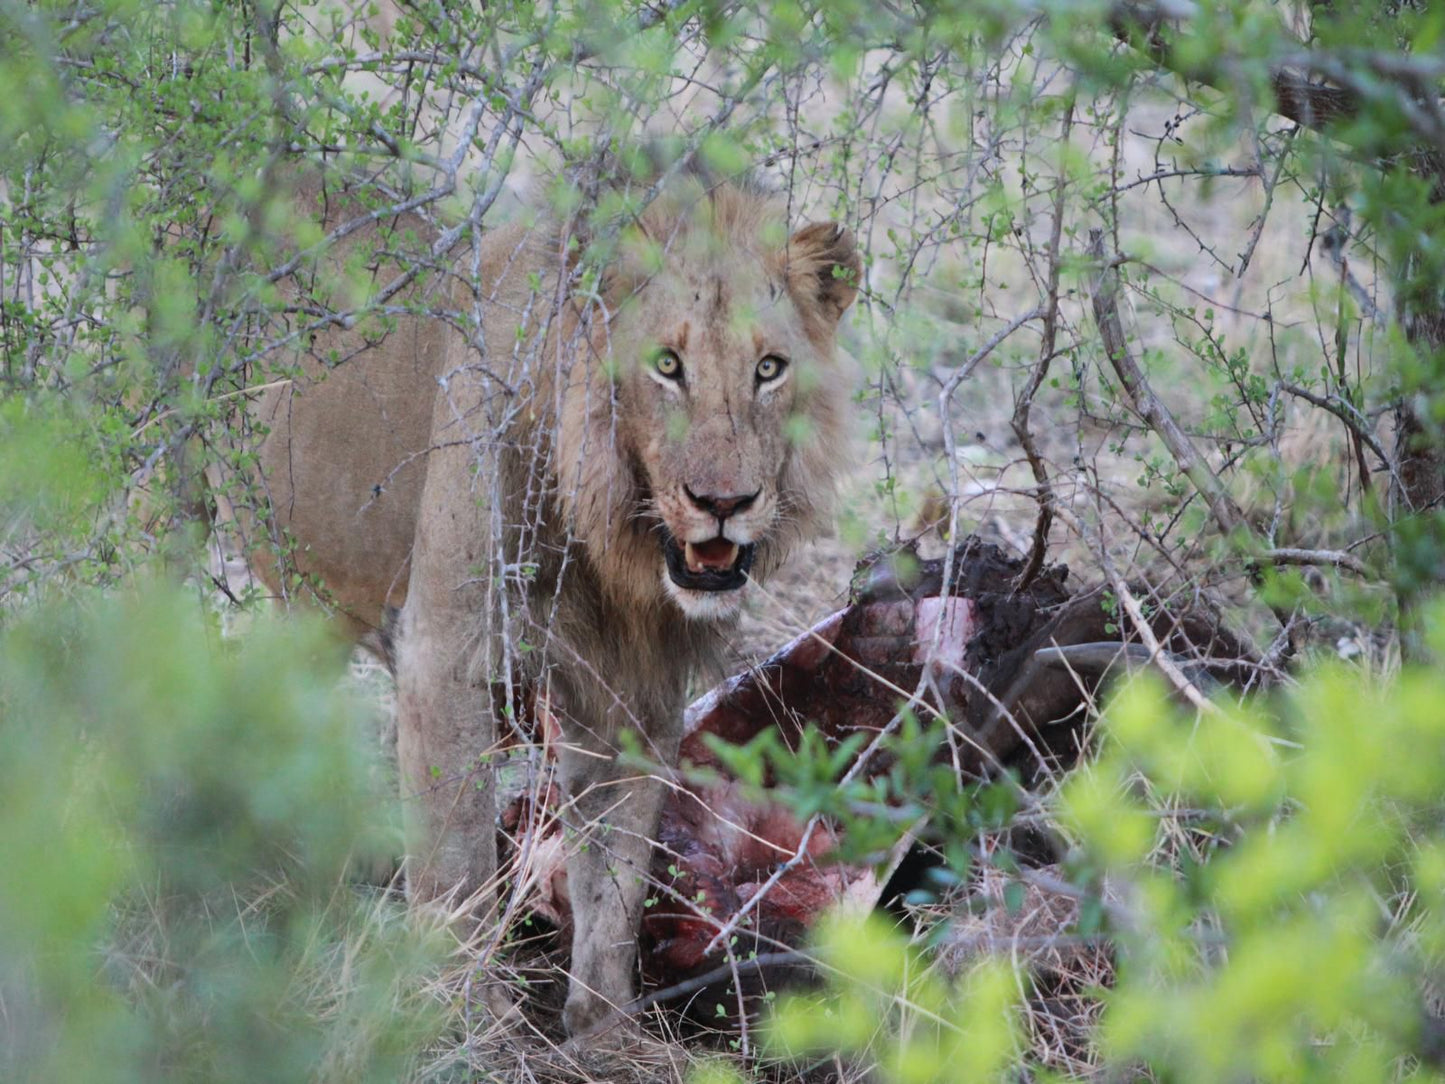 Makumu Private Game Lodge Klaserie Private Nature Reserve Mpumalanga South Africa Lion, Mammal, Animal, Big Cat, Predator